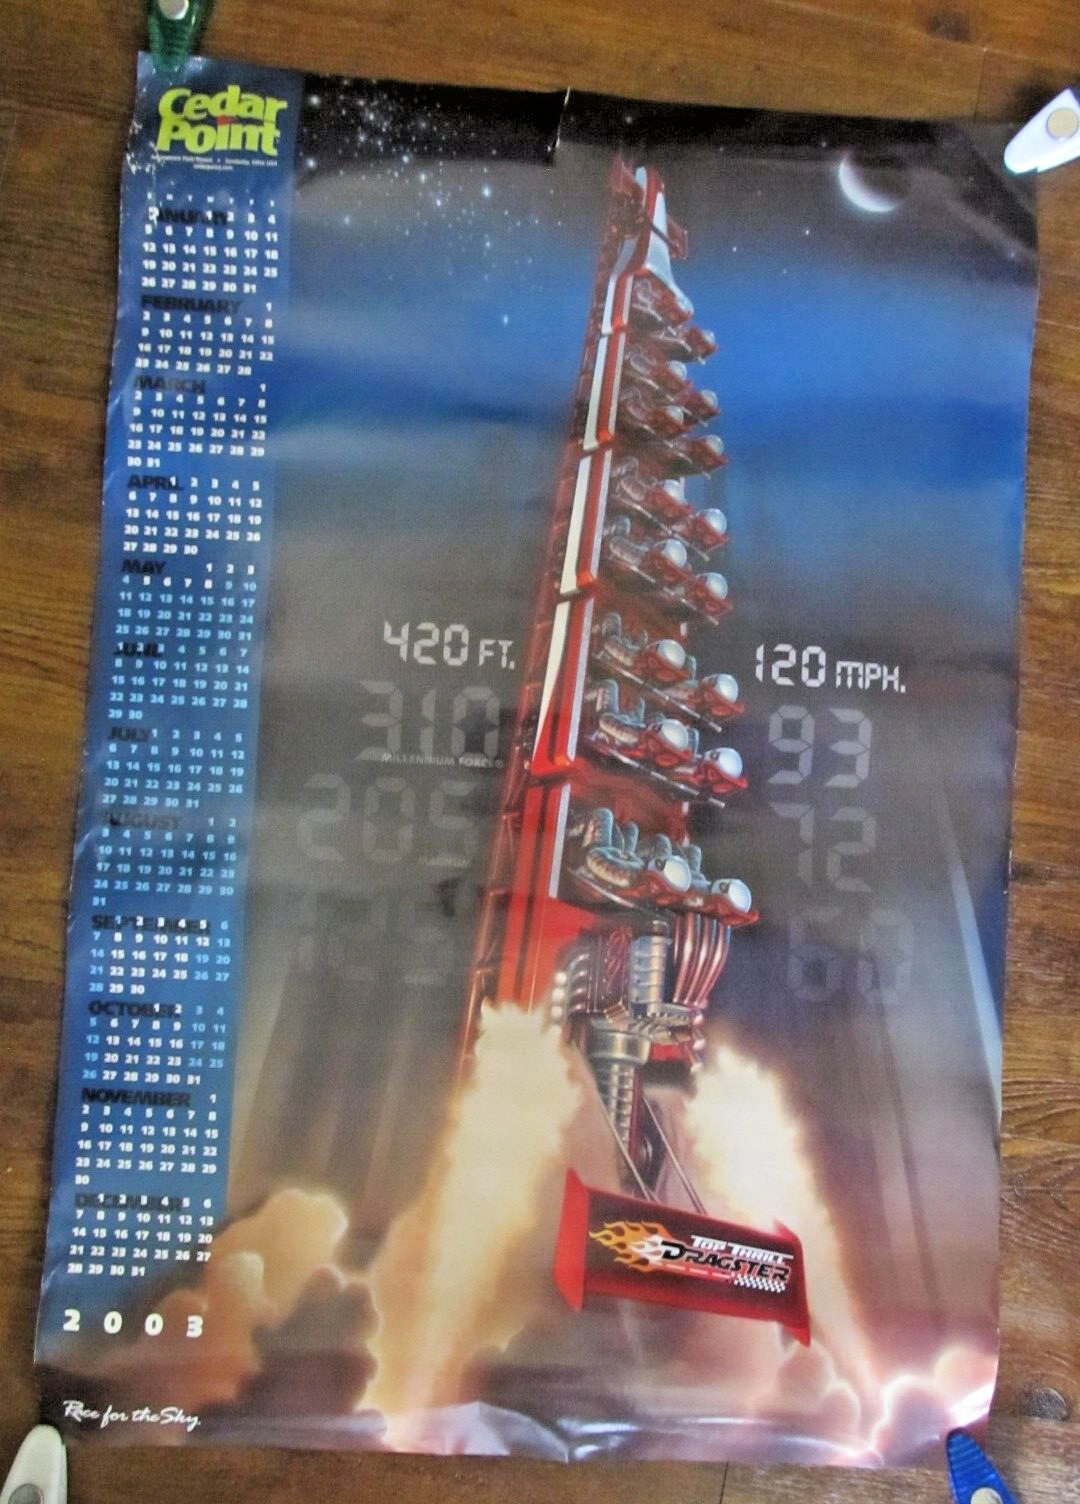 2003 ~ CEDAR POINT Poster Size WALL CALENDAR ~ DRAGSTER Roller Coaster